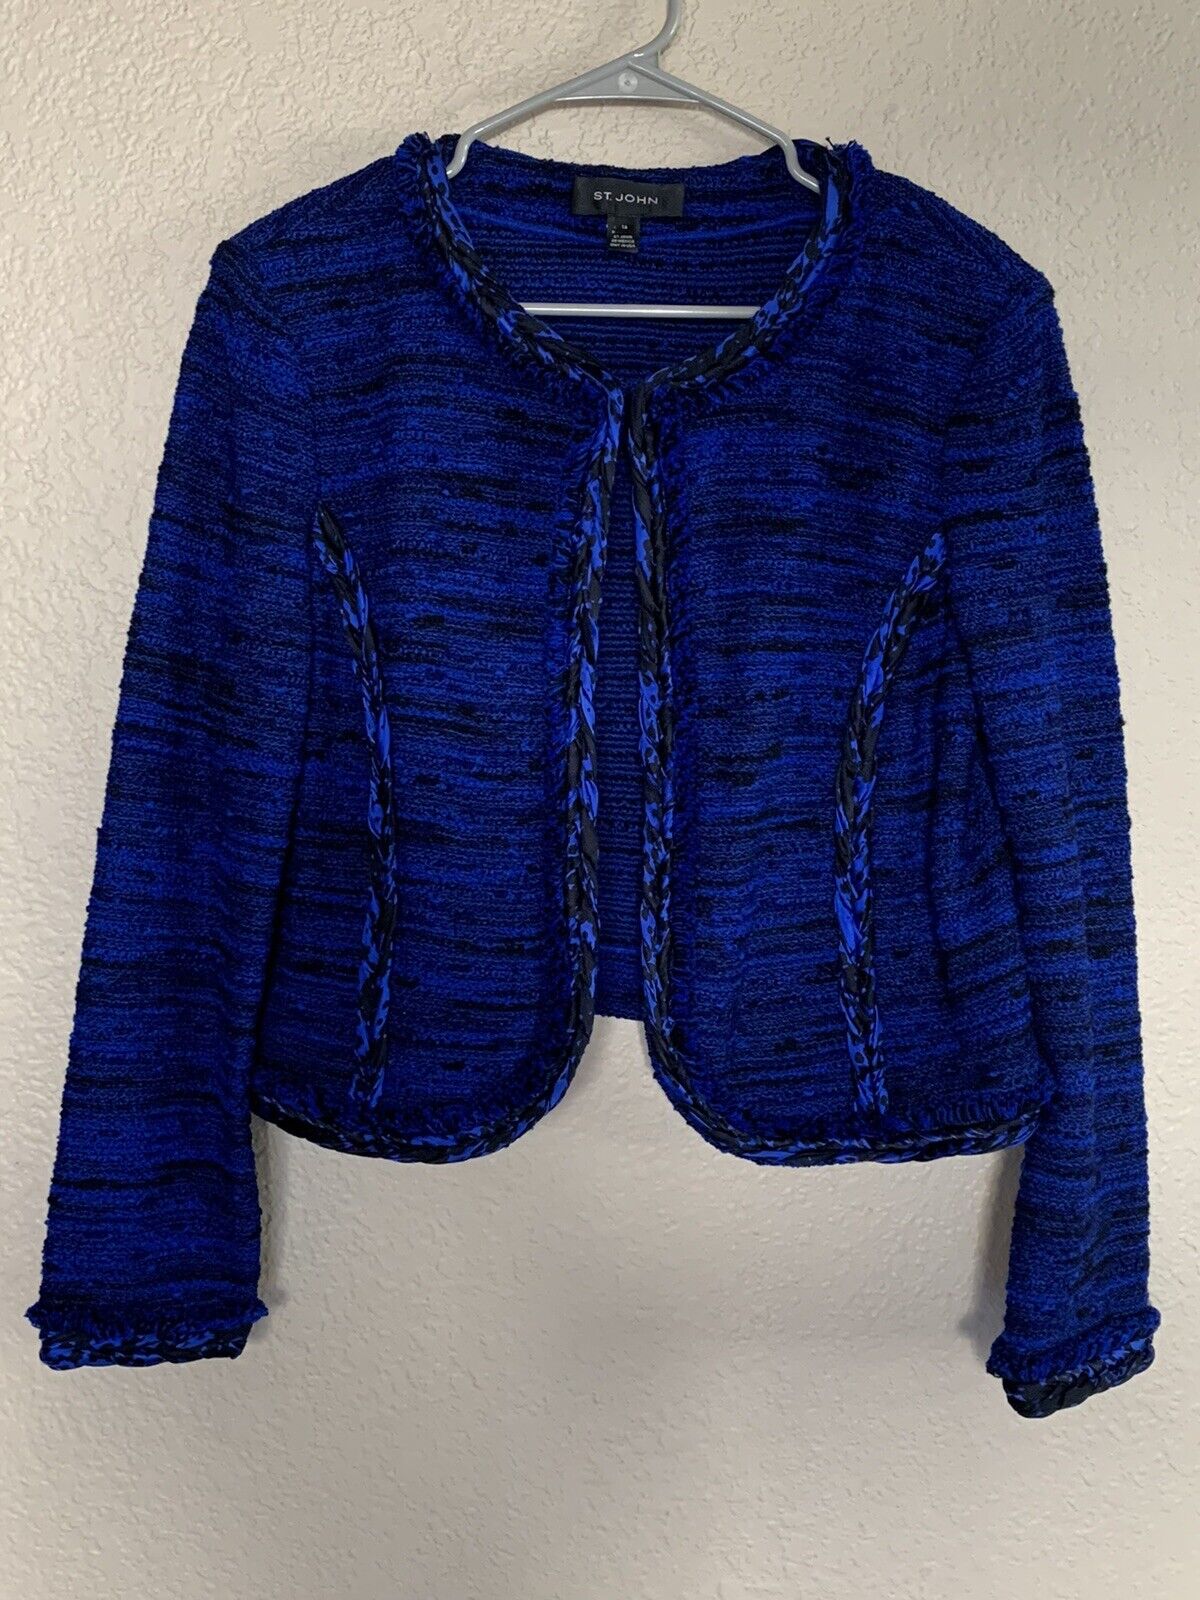 ST JOHN Blazer Coat Suit Jacket Tweed Boucle Evening Bolero Knit Wool SZ 16